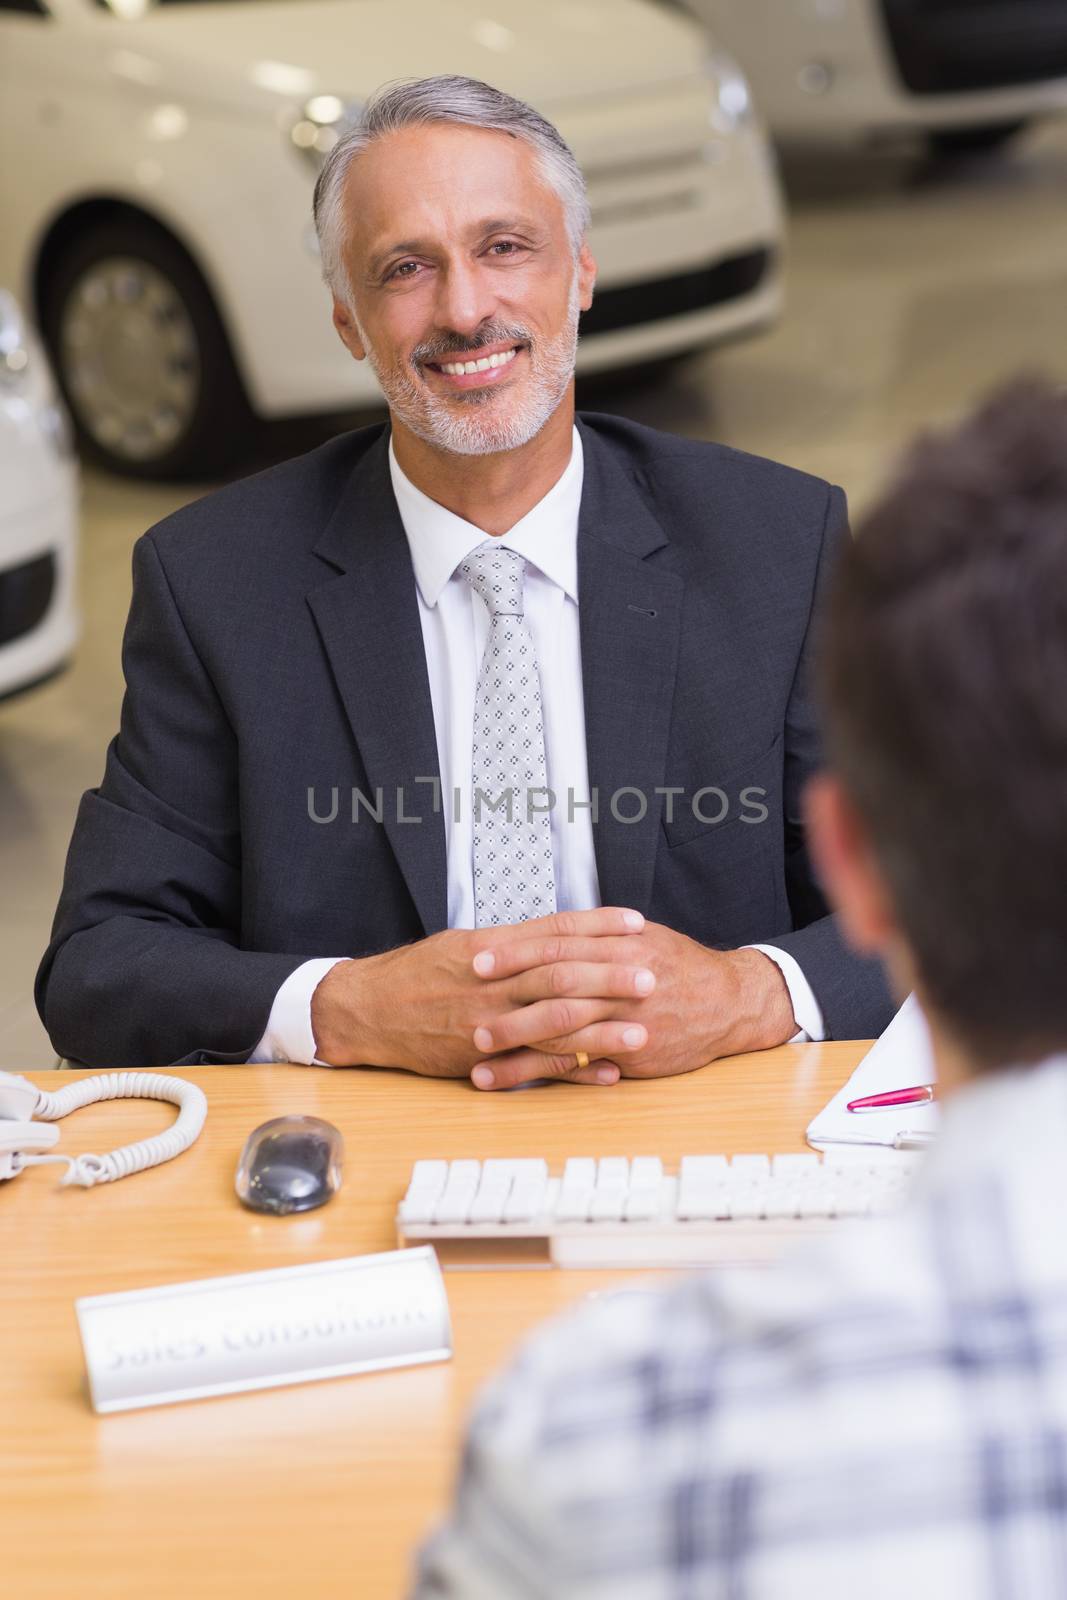 Smiling businessman looking at camera by Wavebreakmedia